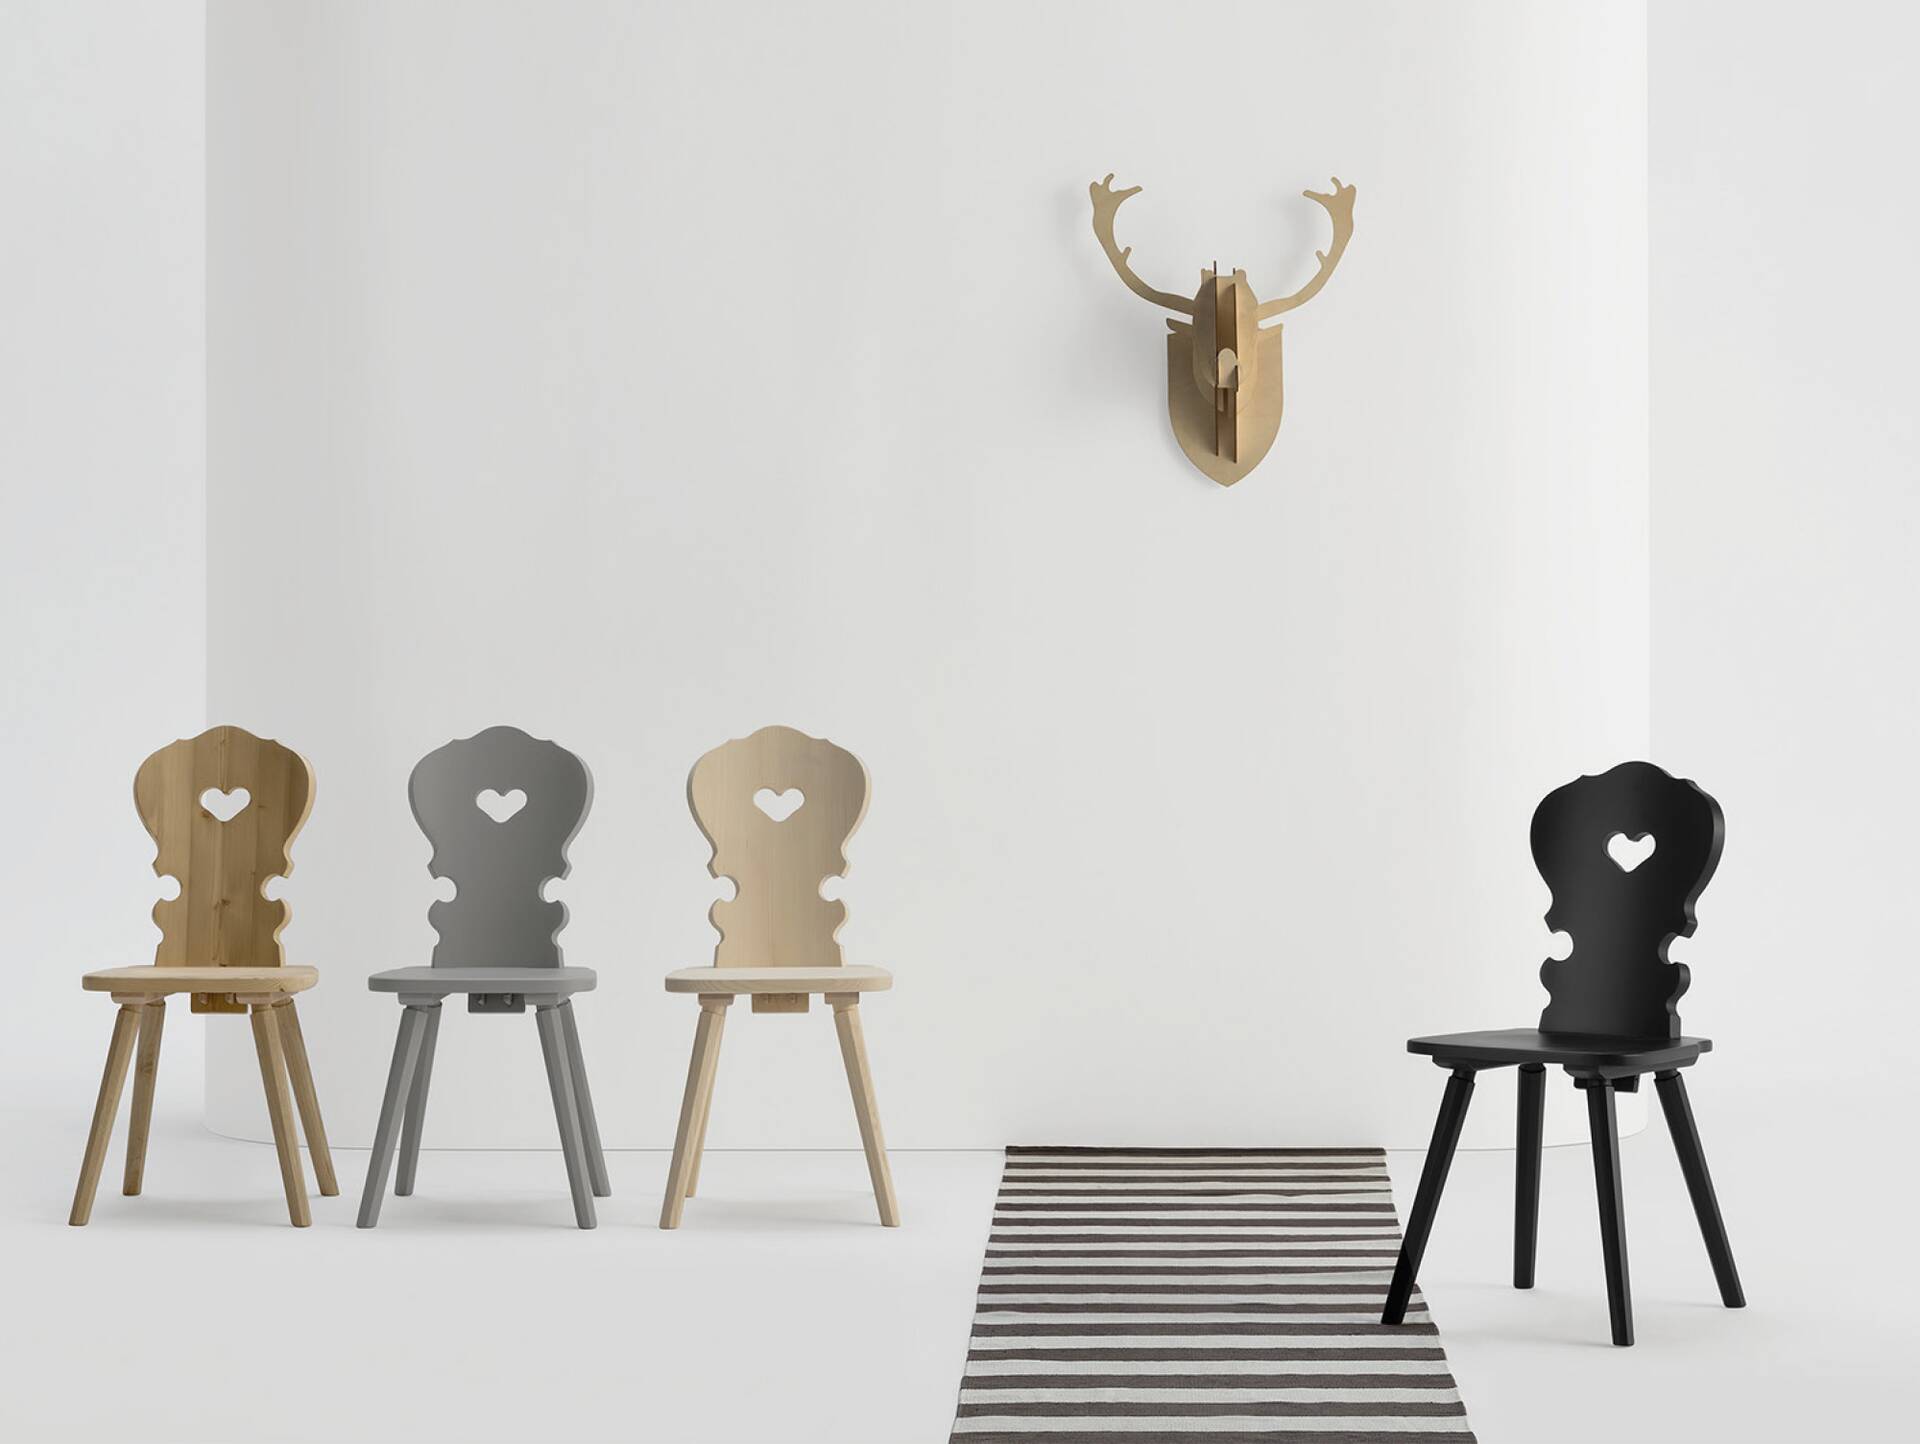 VALERIO Stuhl, Material Massivholz, Esche lackiert 